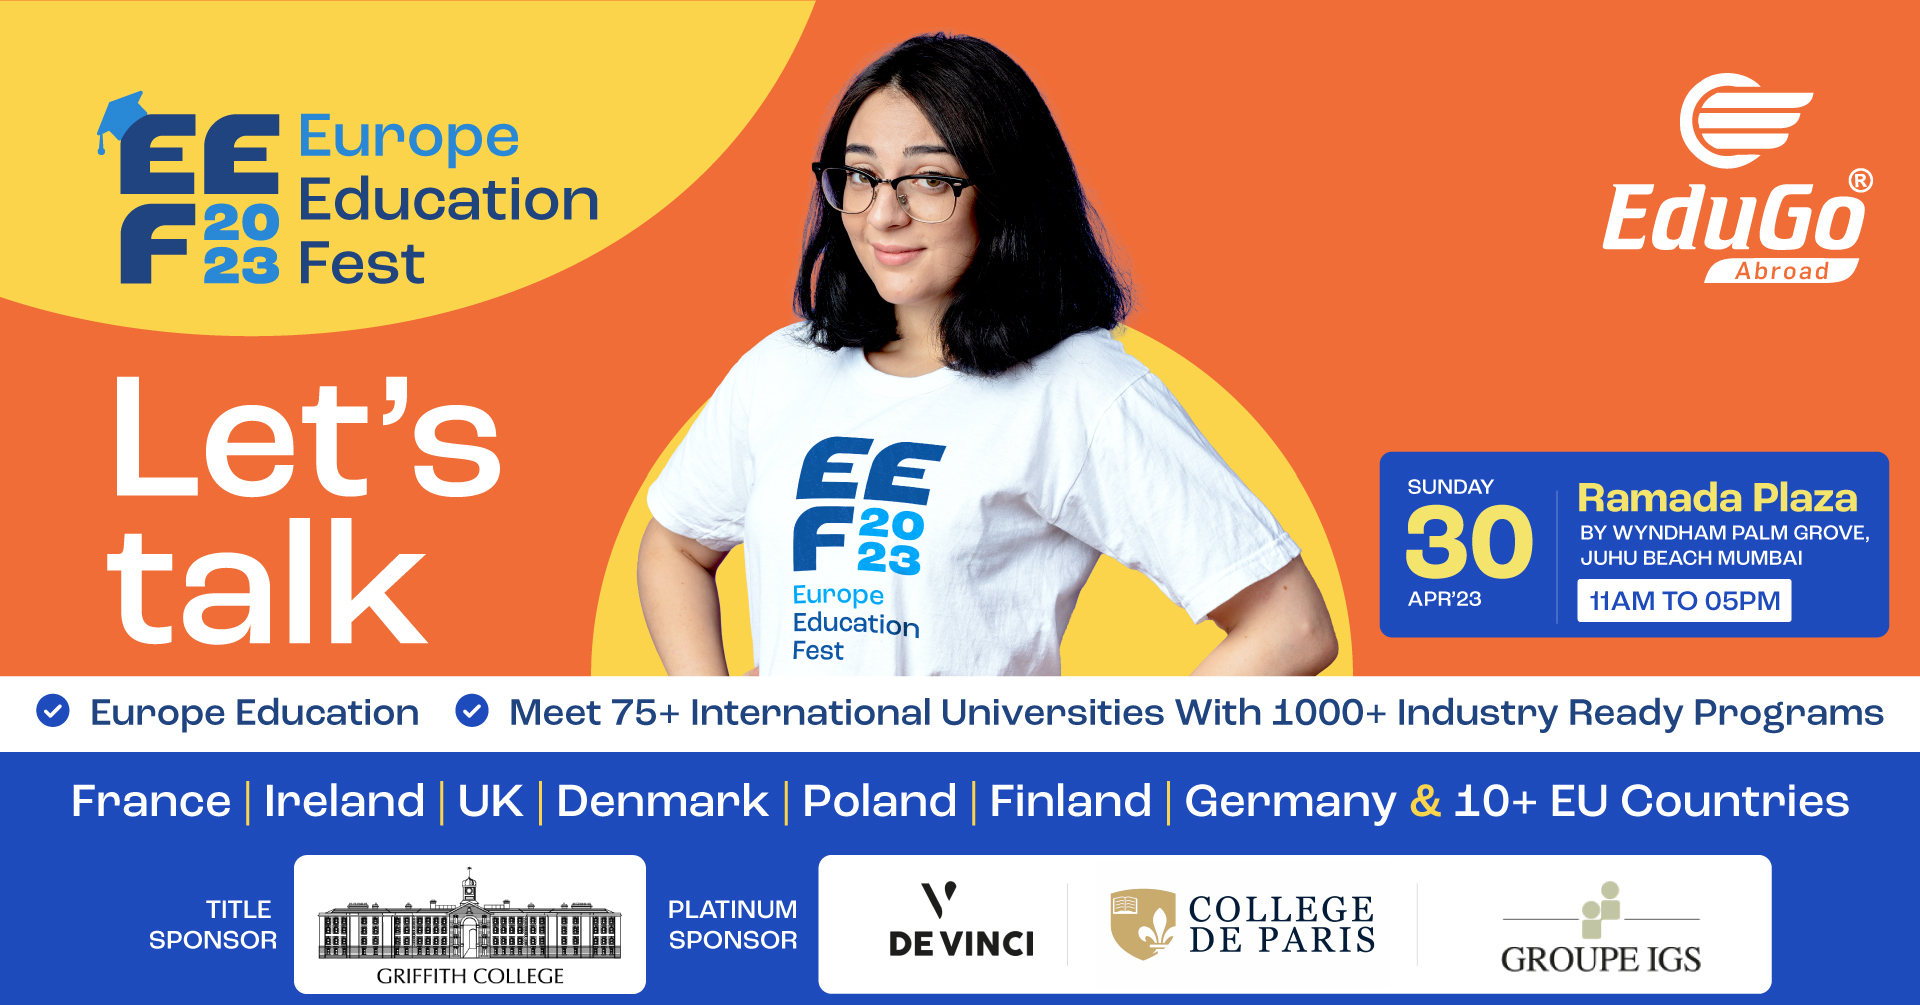 Europe Education Fest 2023 - Edugo Abroad(Mumbai), Ahmedabad, Gujarat, India